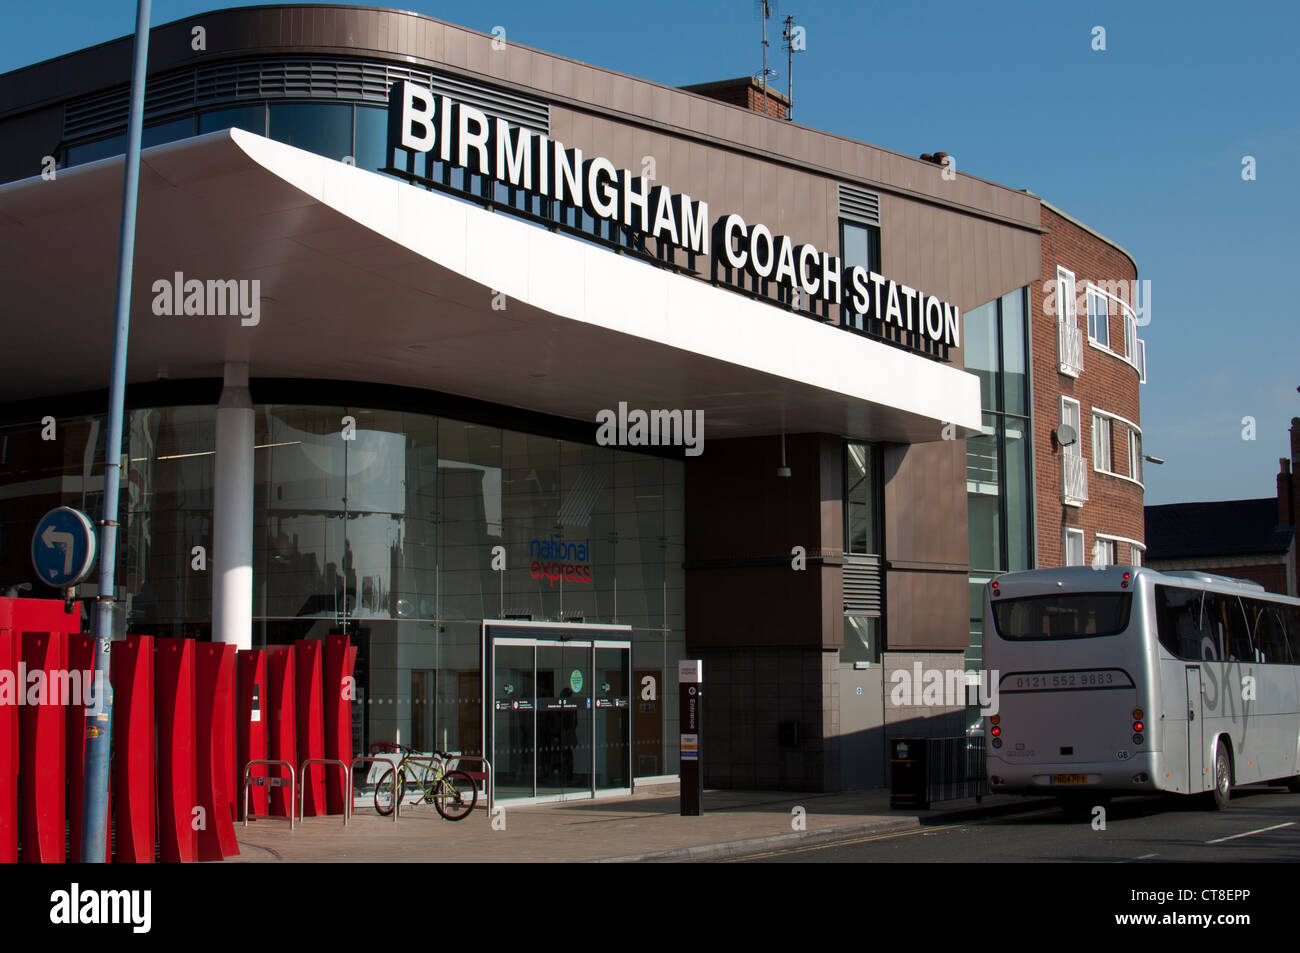 Birmingham Coach Station, Digbeth, Birmingham, UK Stock Photo - Alamy